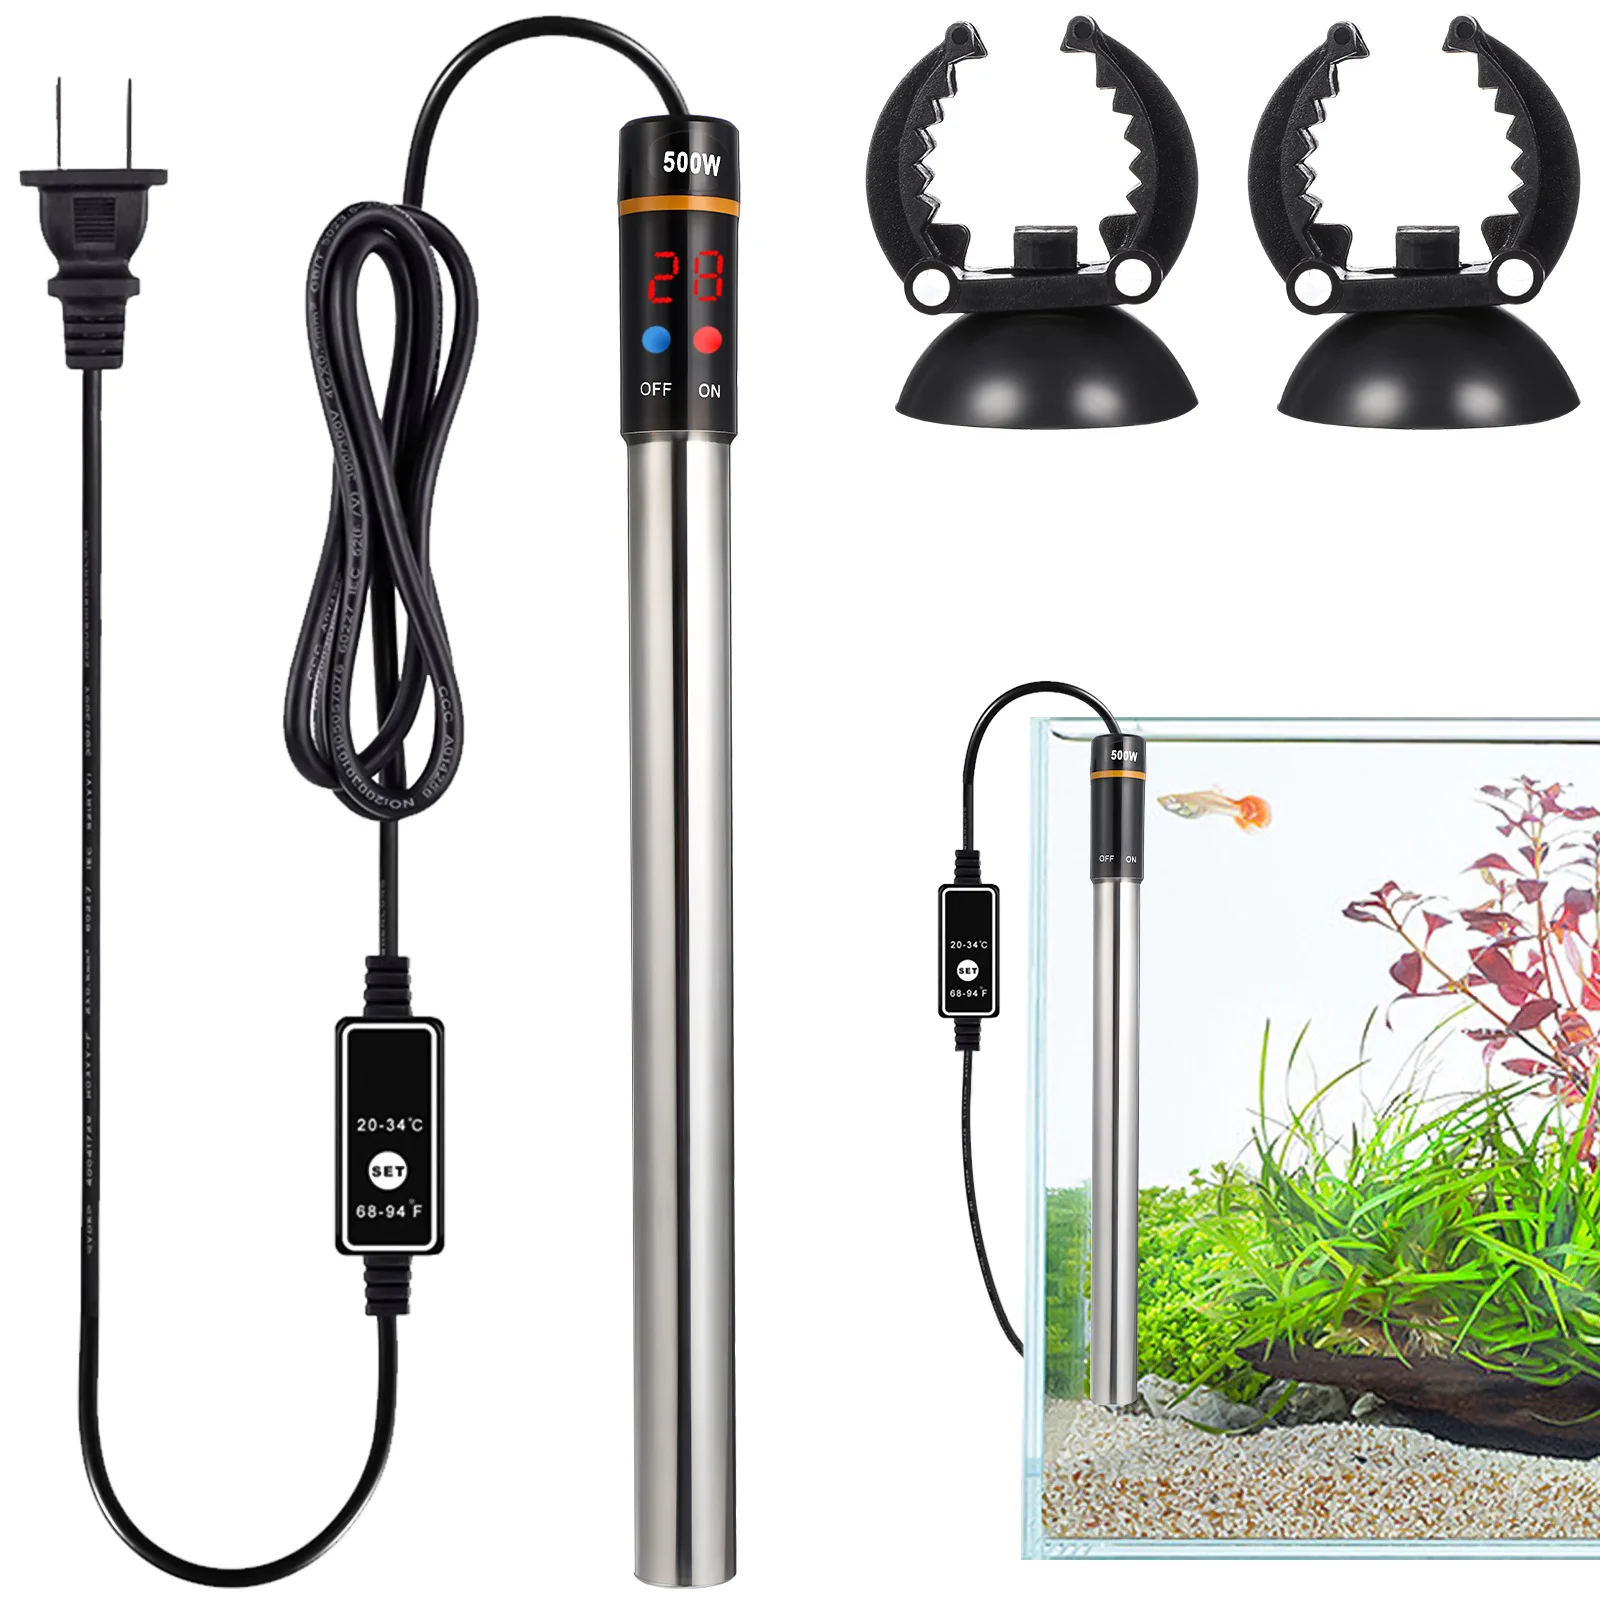 

Betta Fish Heater Aquarium Tank Water Thermostats Submersible Stainless Steel Adjustable